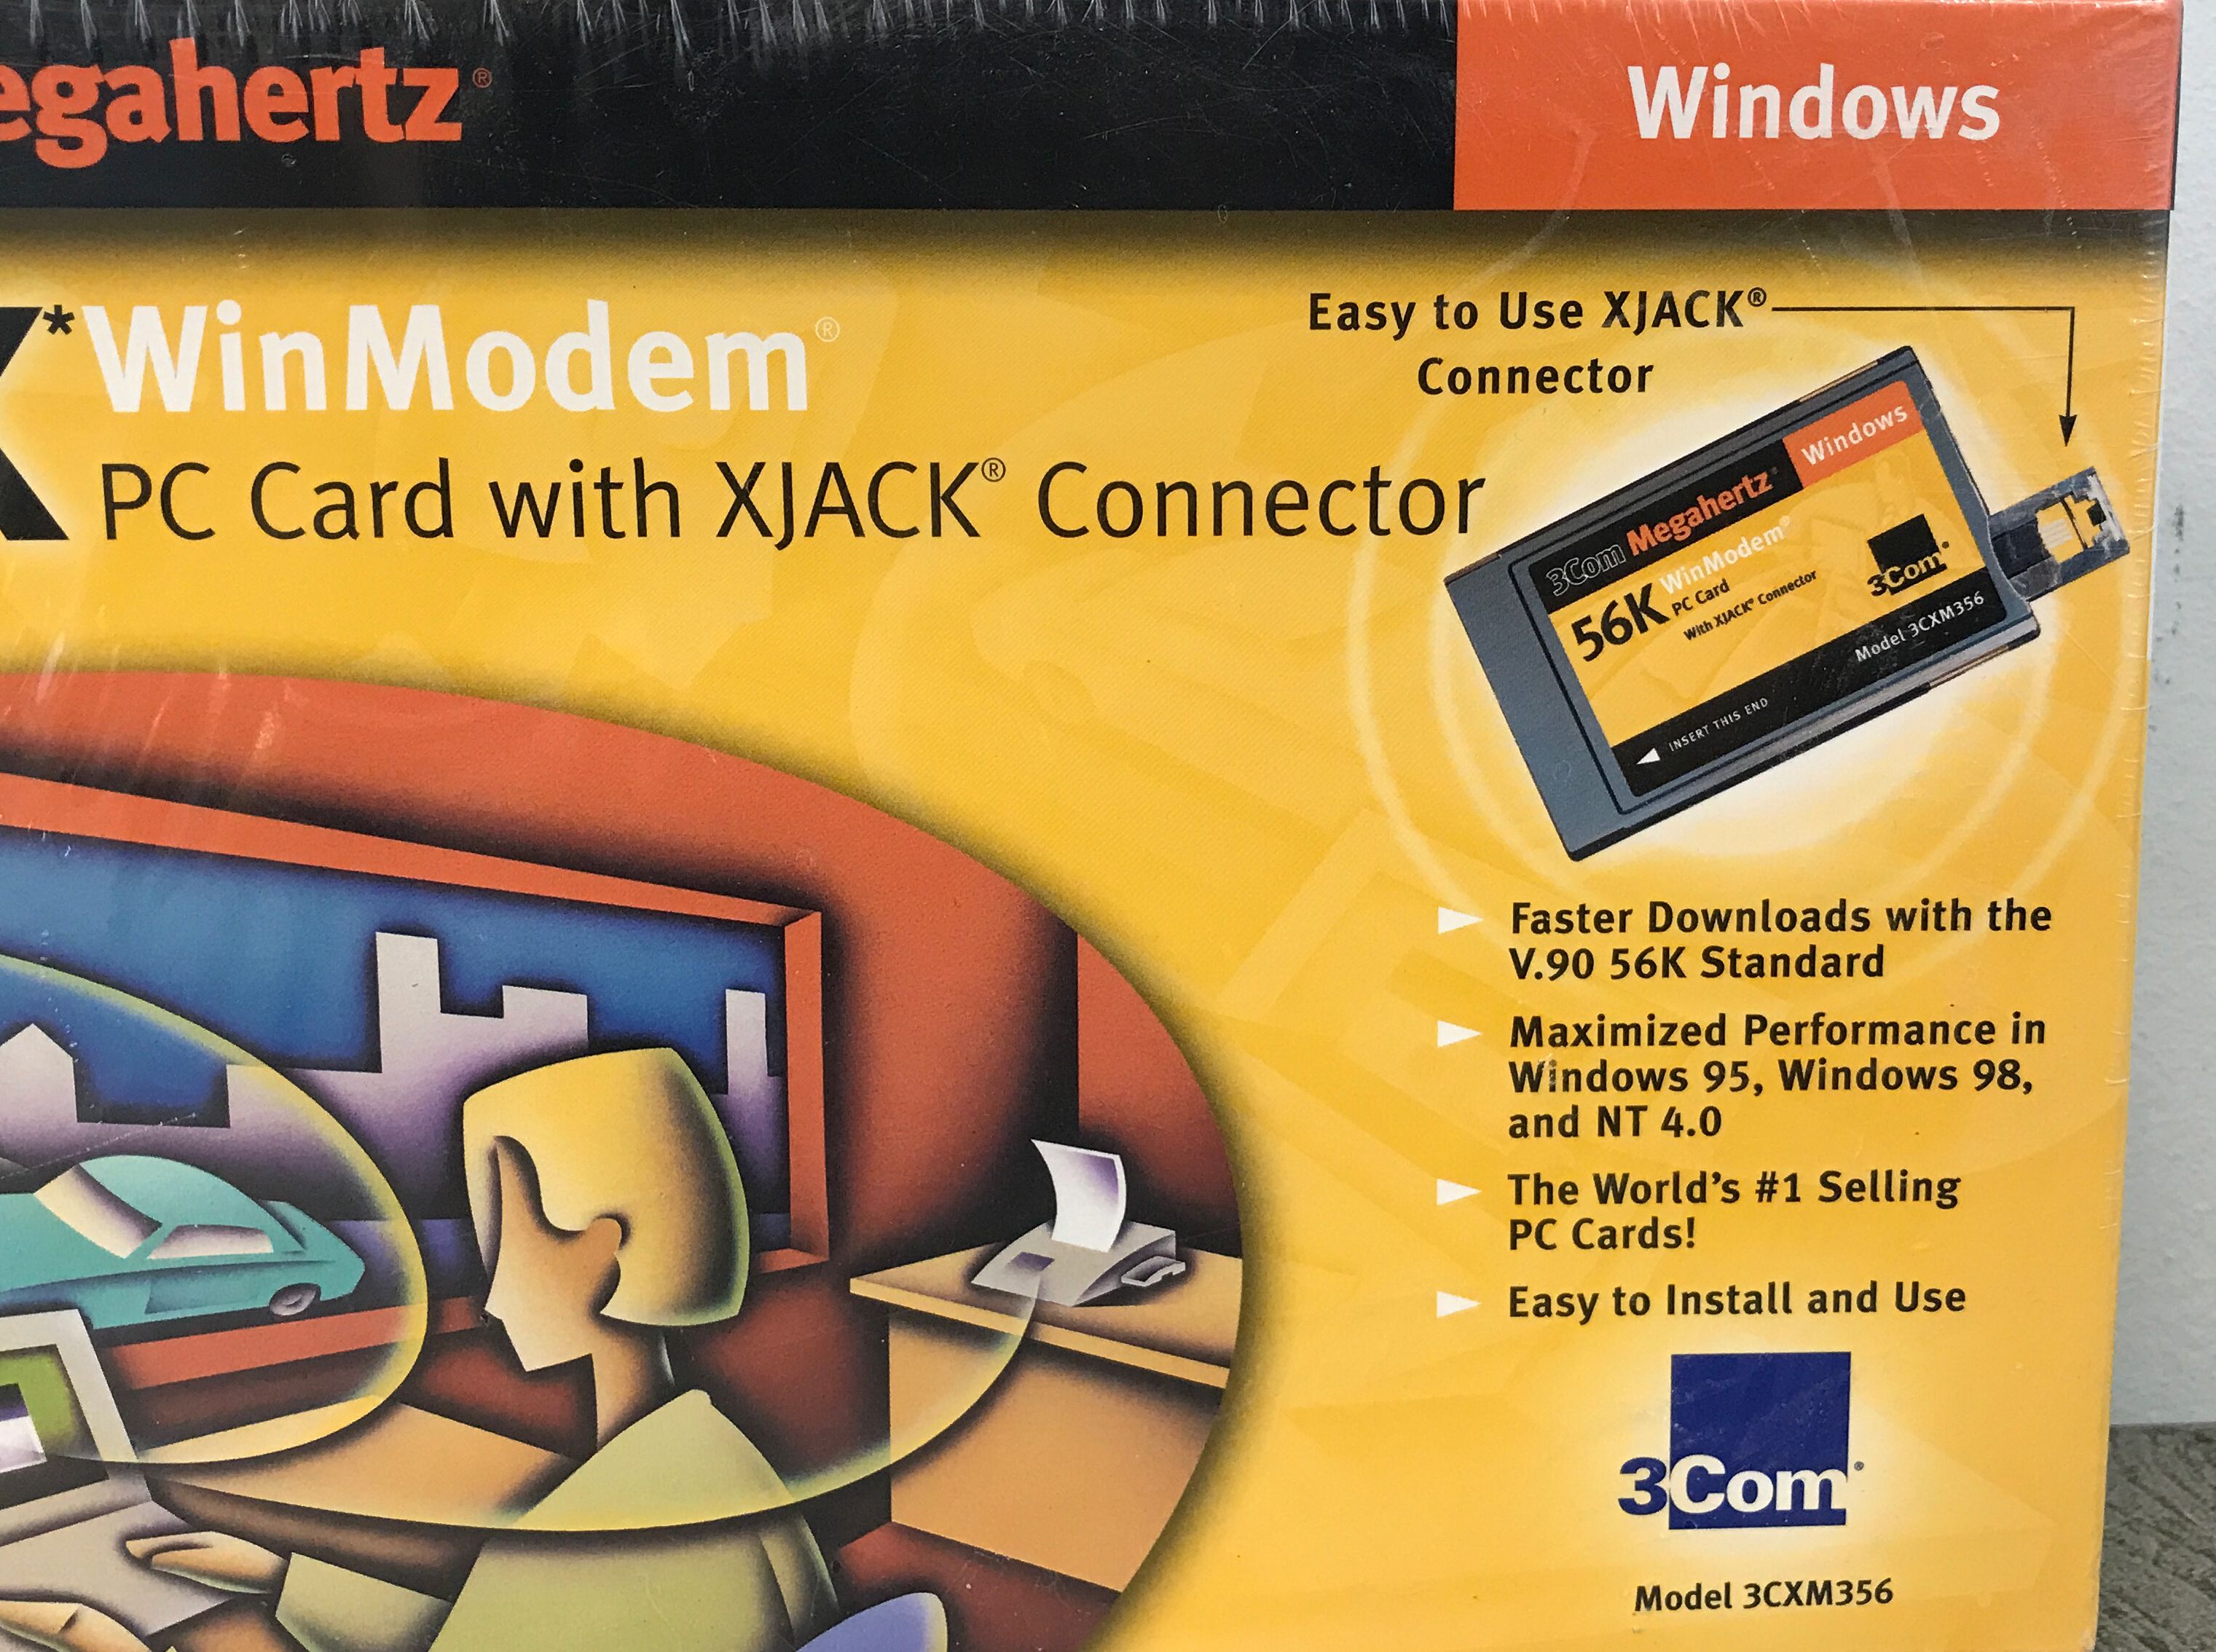 Windows 3com WinModem 56K PC Card with XJACK Connector